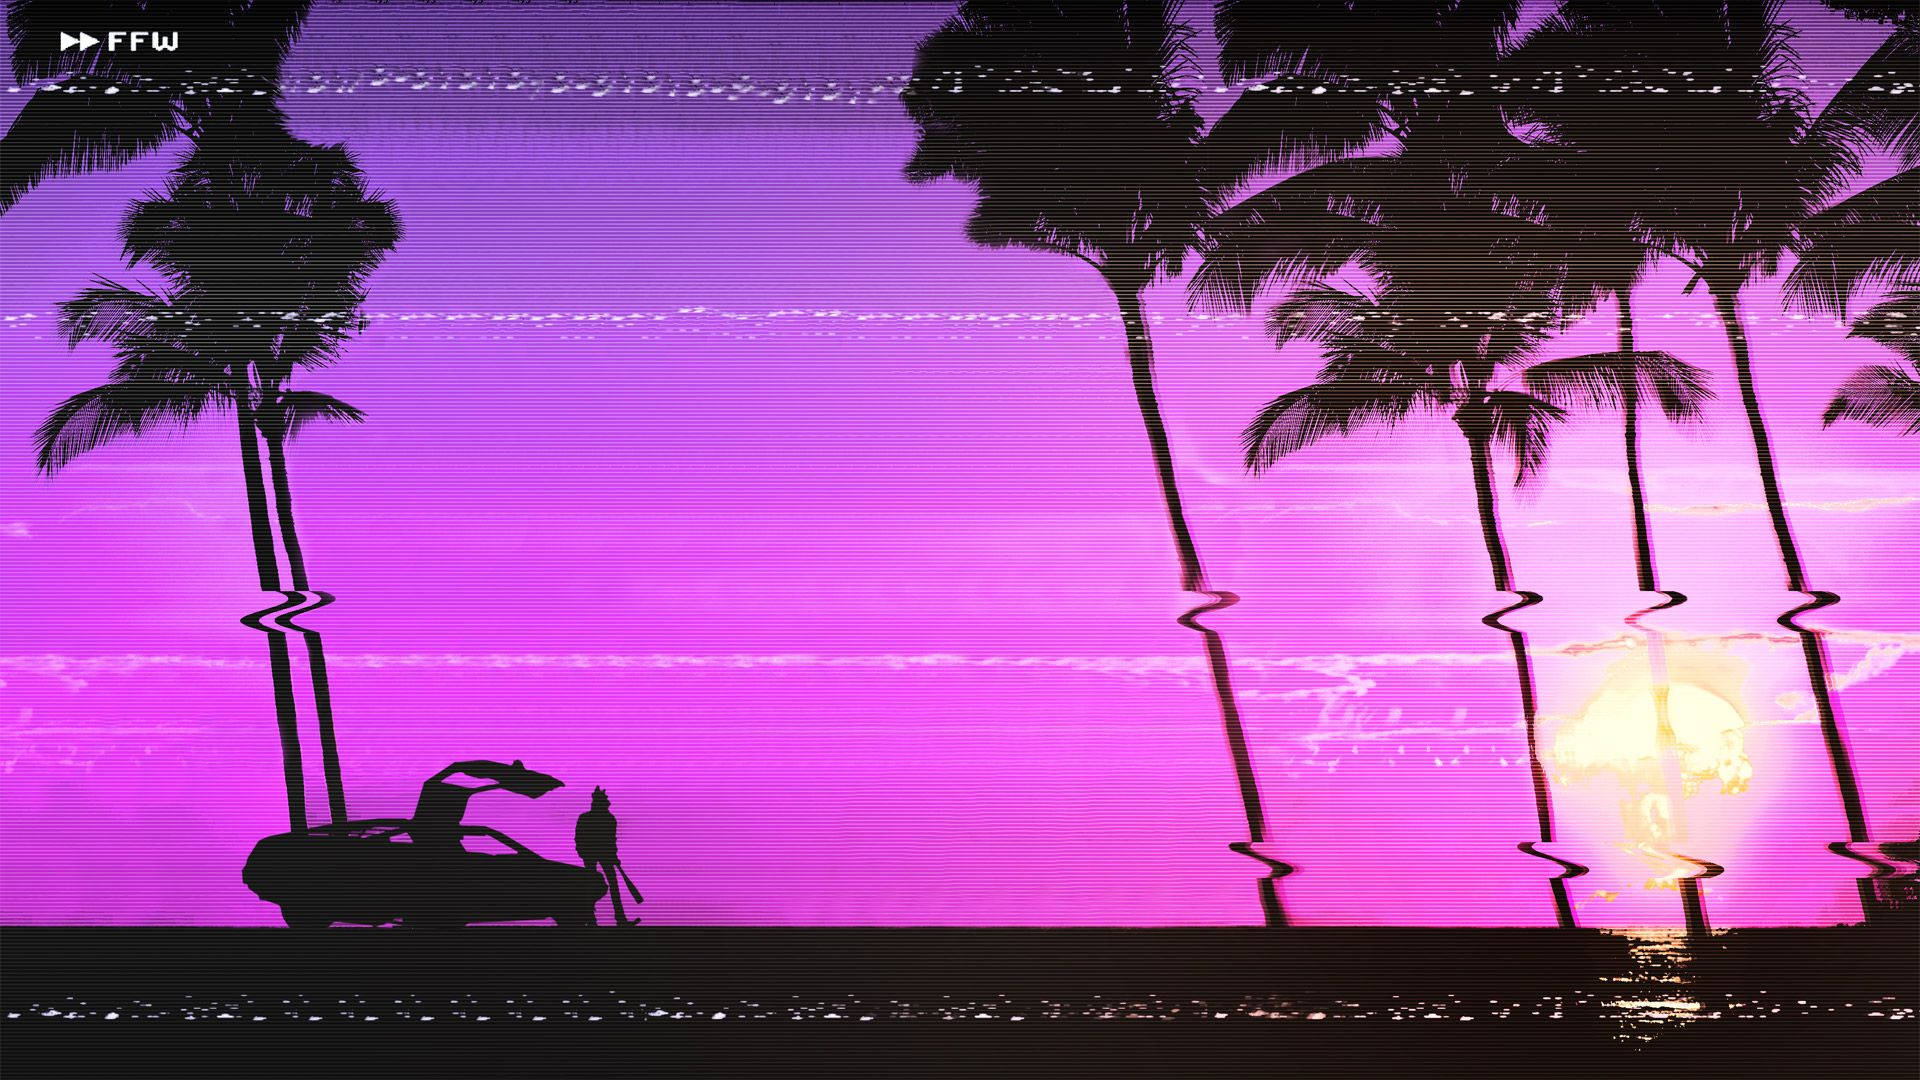 Glitch Hotline Miami with palm trees roadside car purple black wallpaper.